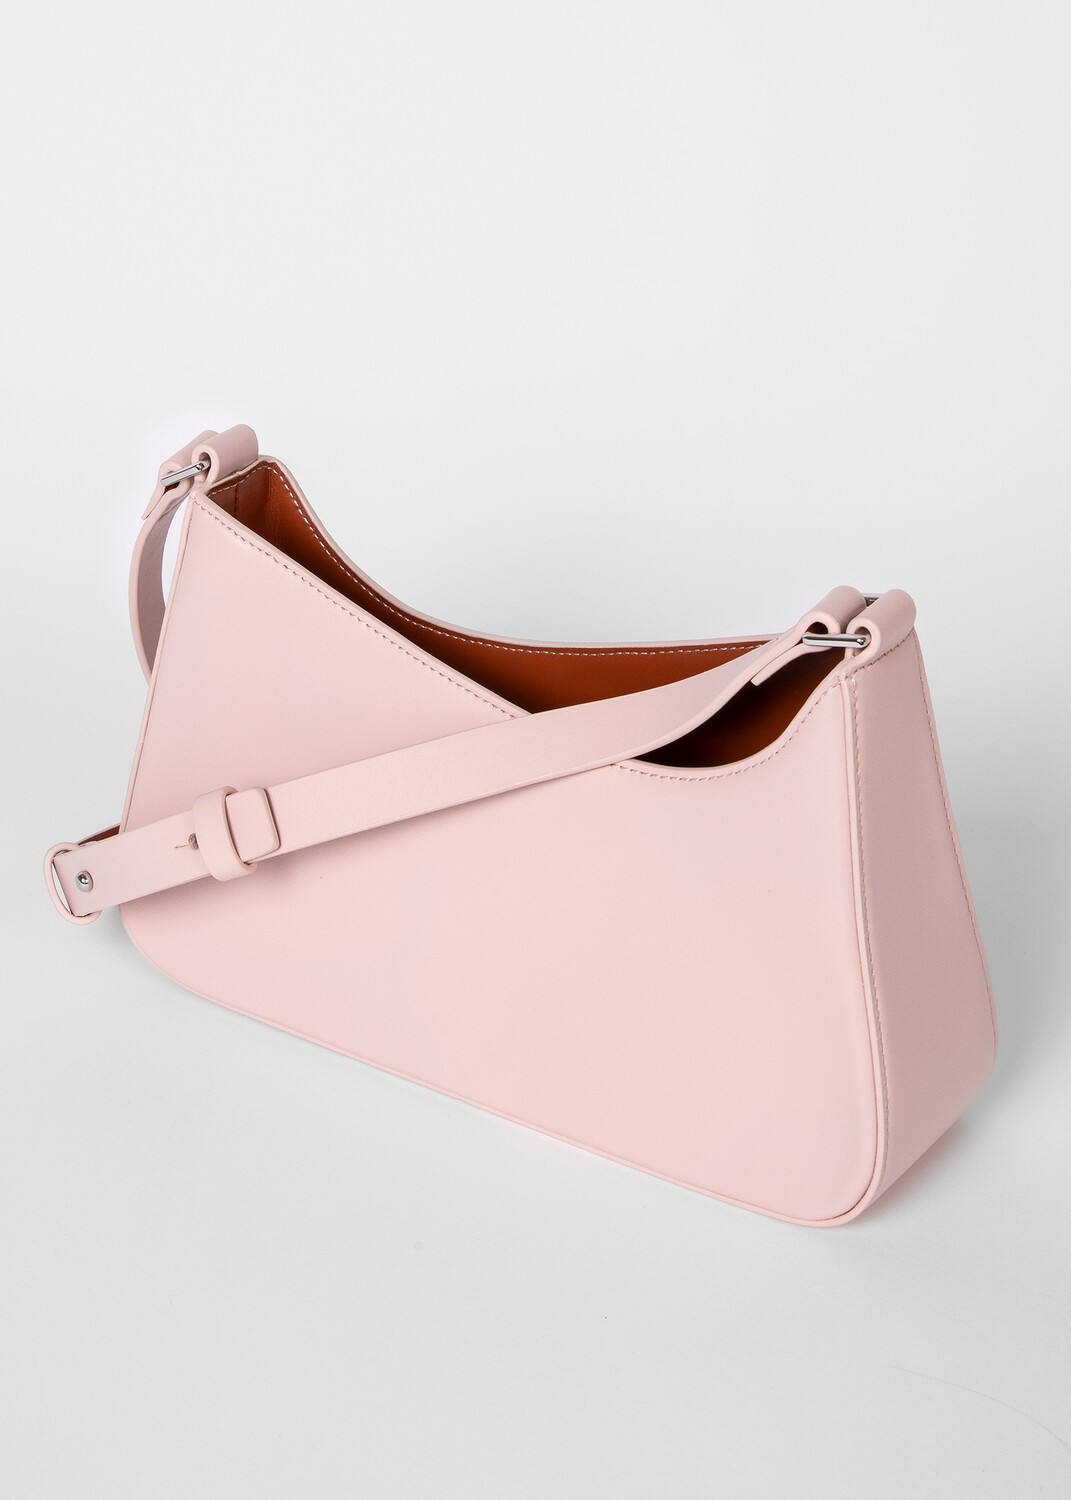 paul-smith-light-pink-cross-body-bag